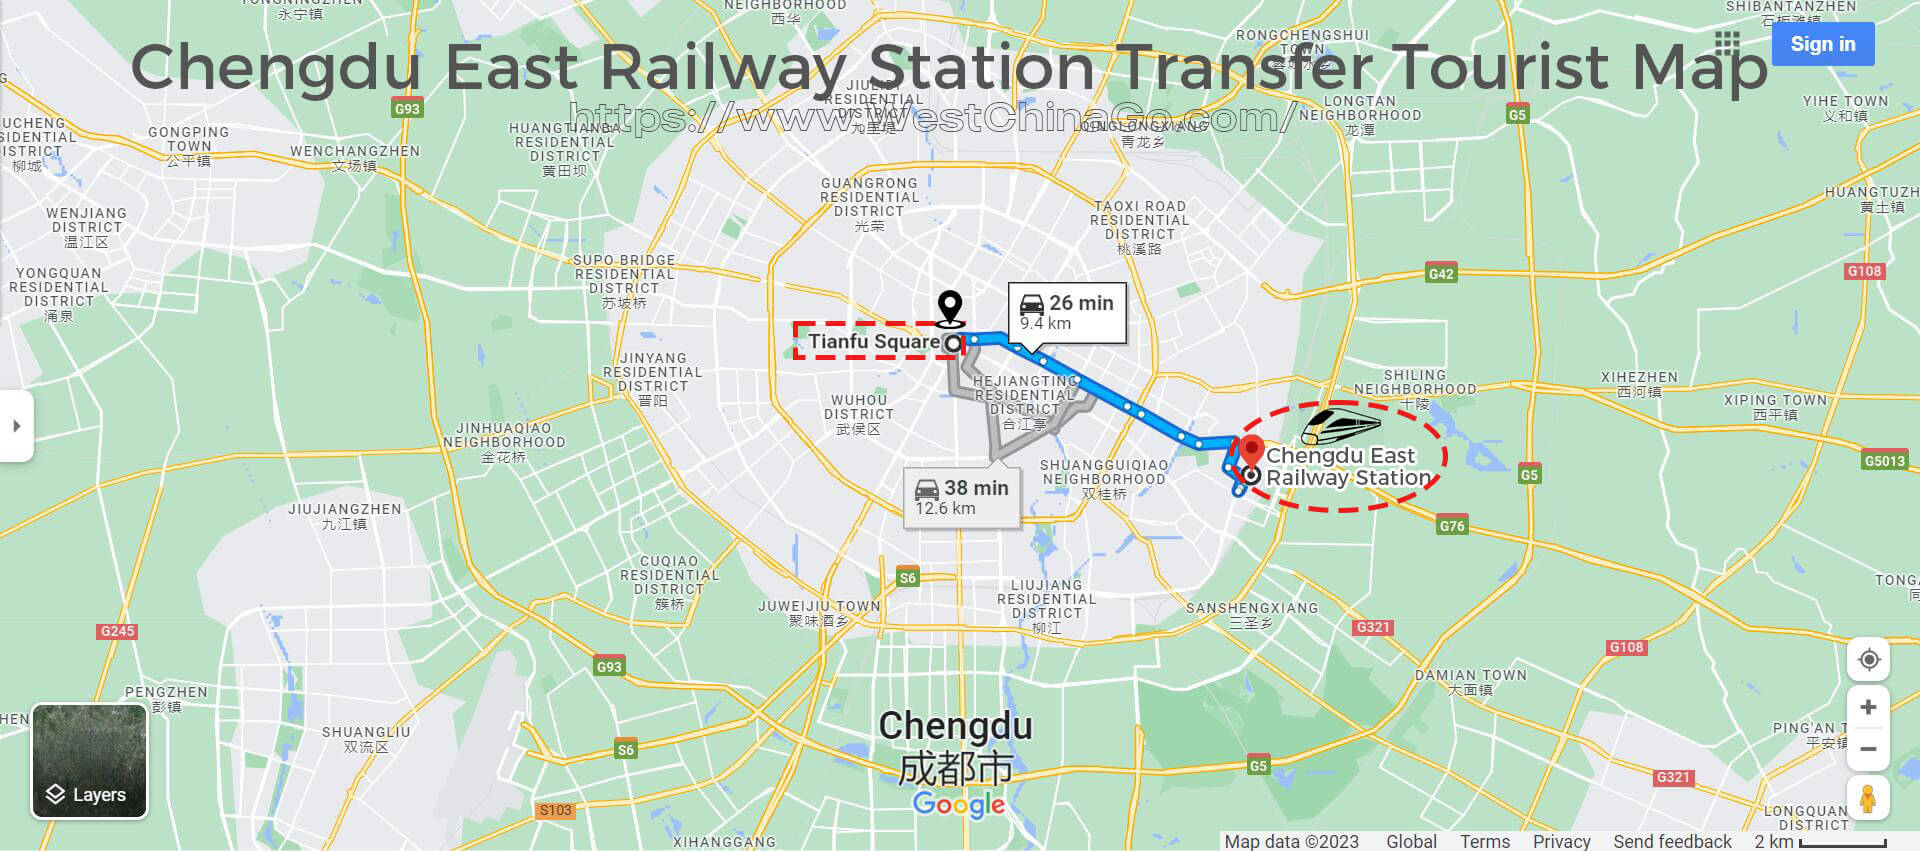 ChengDu East Railway Station Transfer Tourist Map